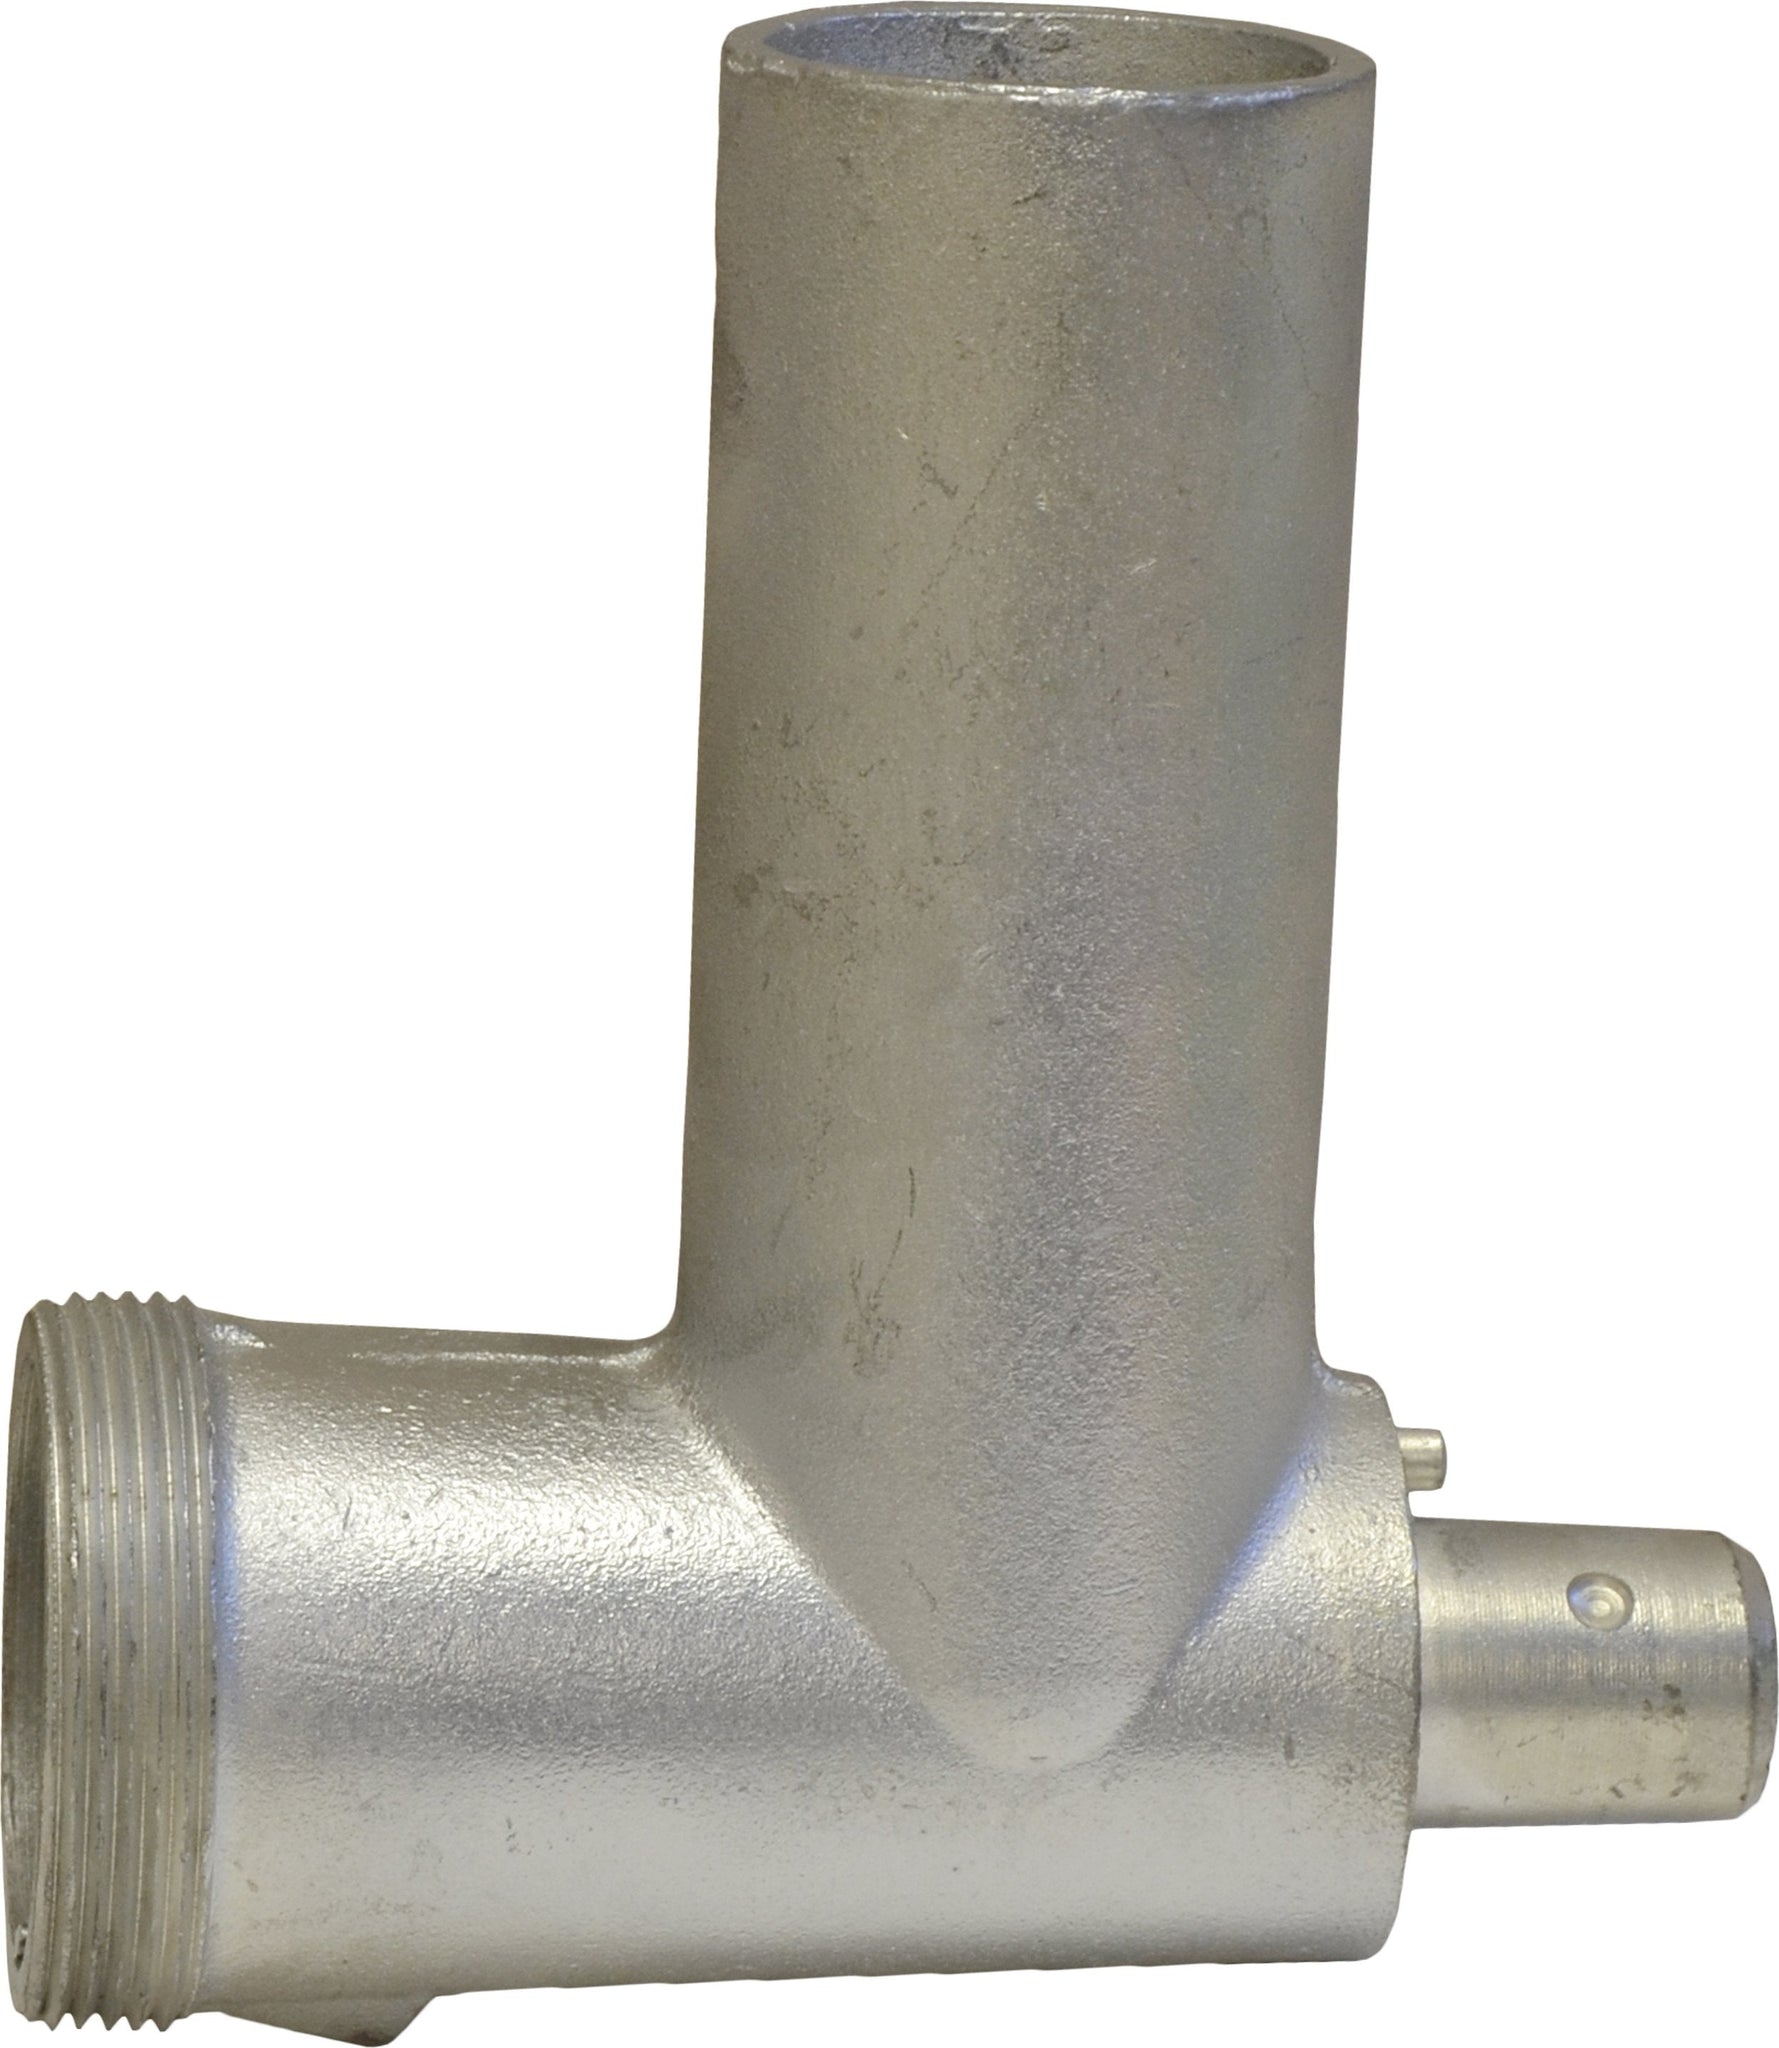 Omcan - Grinder Head Cylinder For Mixers, 4/cs - 10052